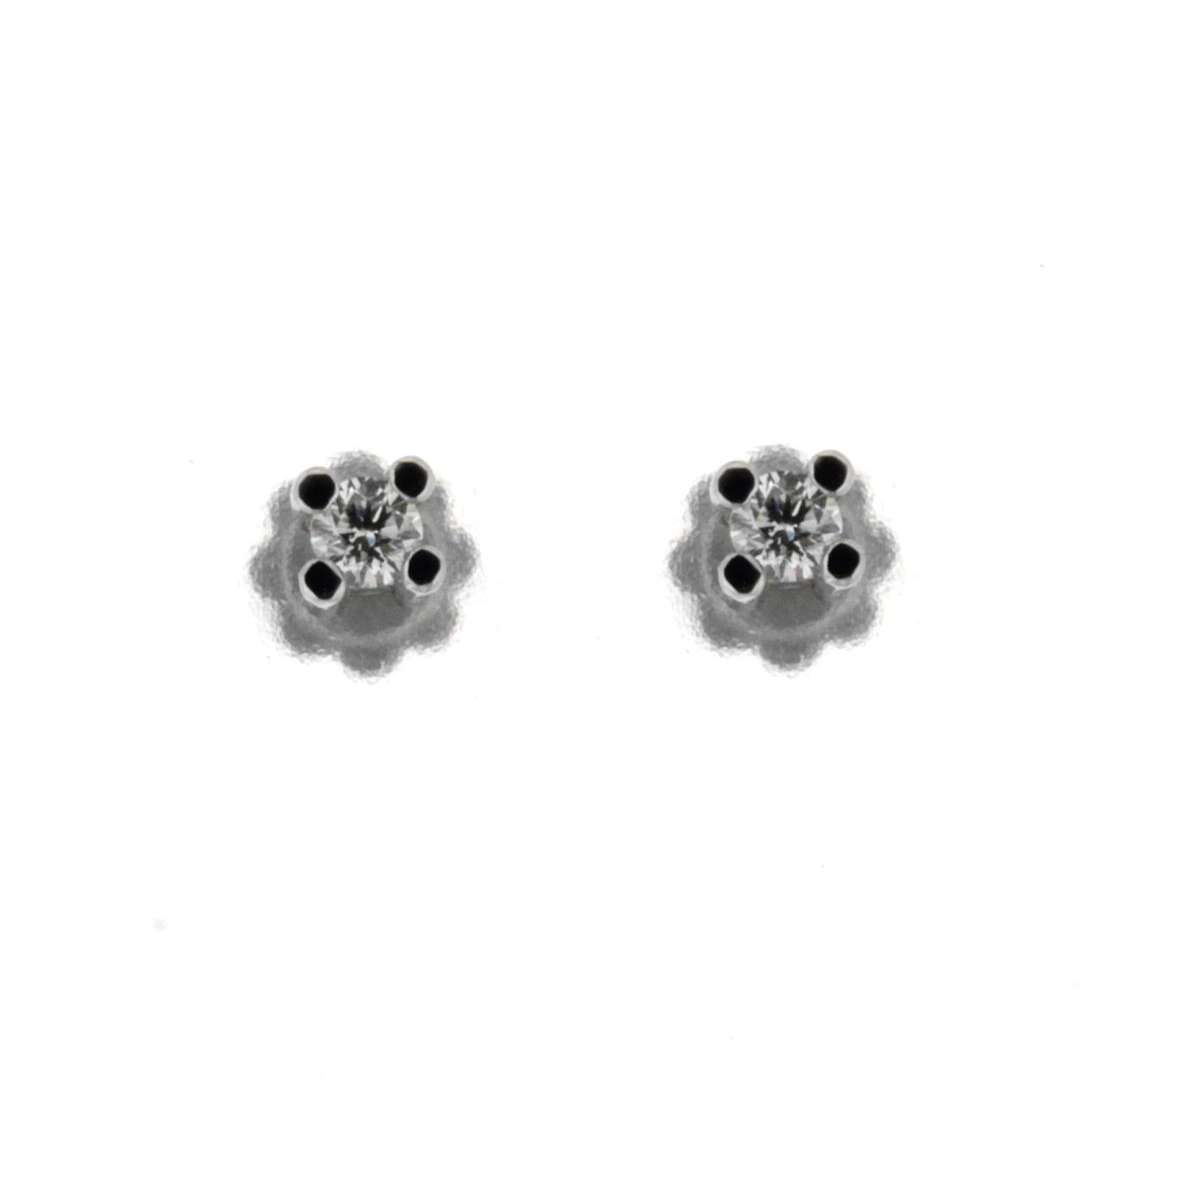 Solitaire earrings 0.30 carats diamonds E-VS1